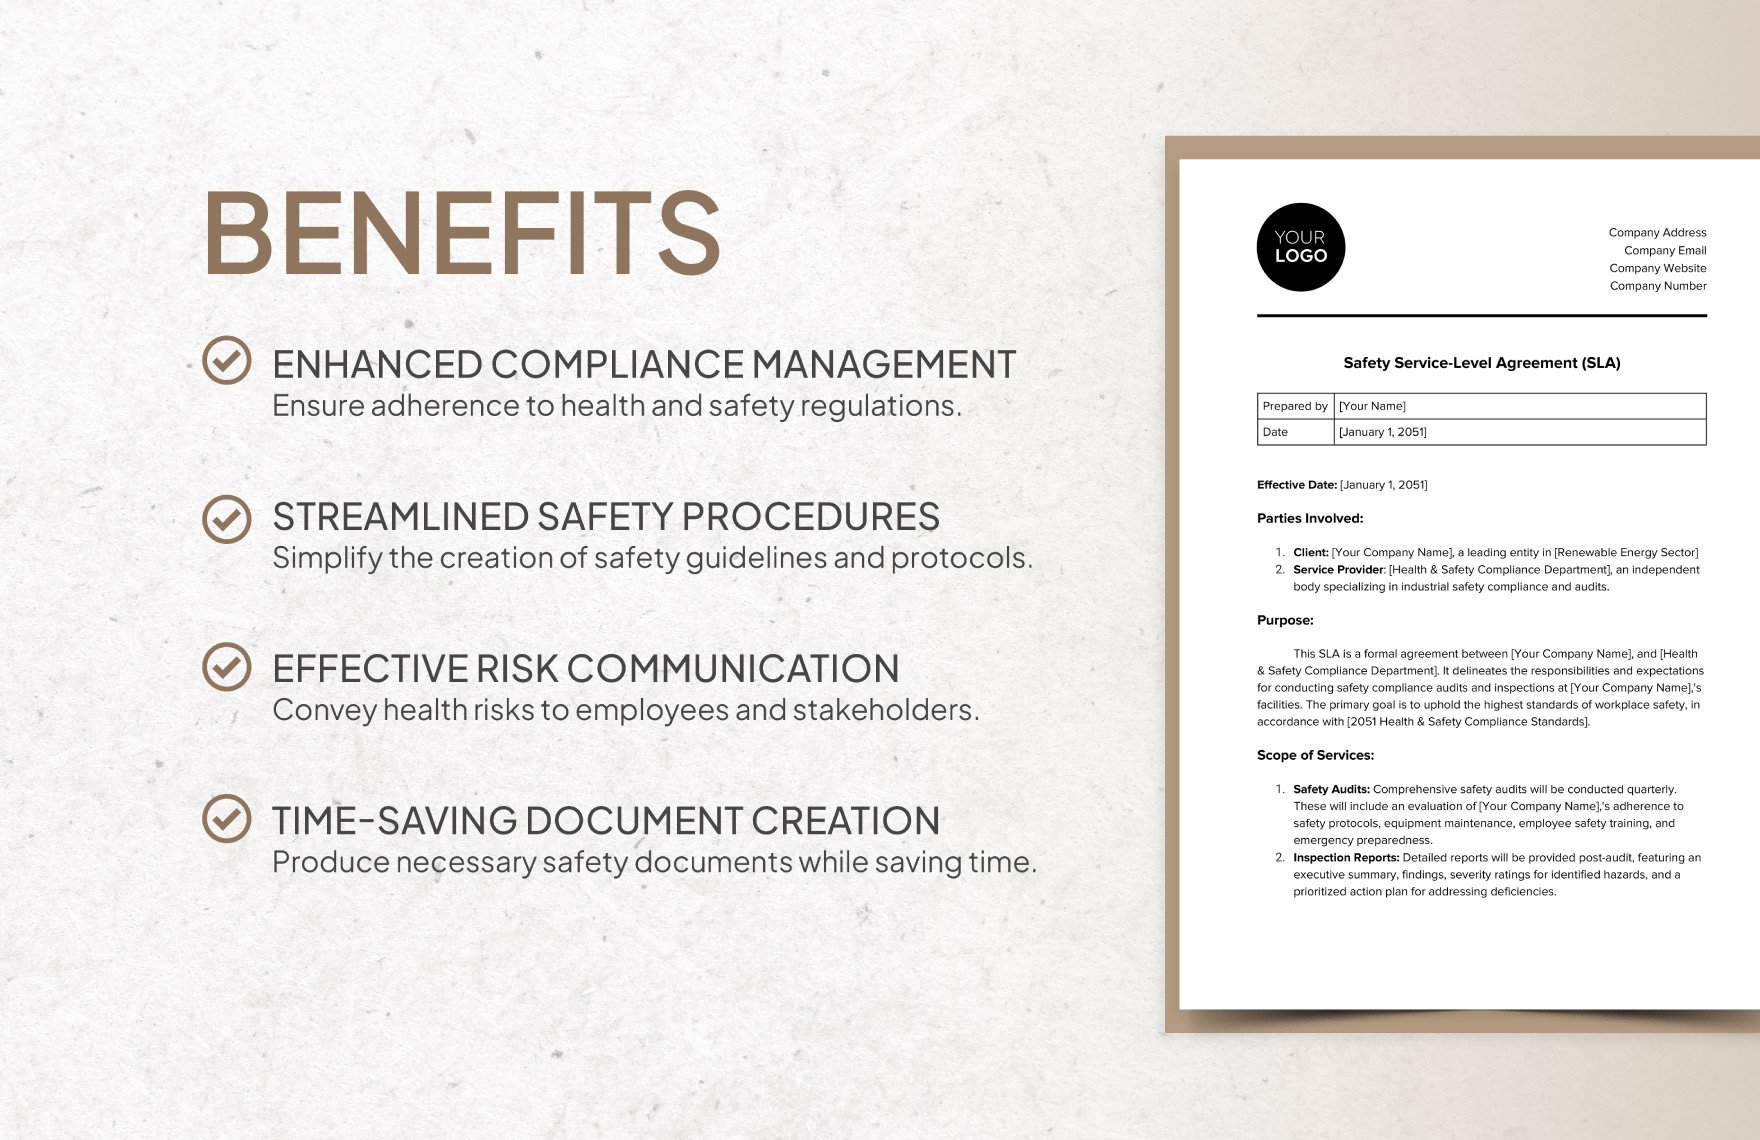 Safety Service-Level Agreement (SLA) Template